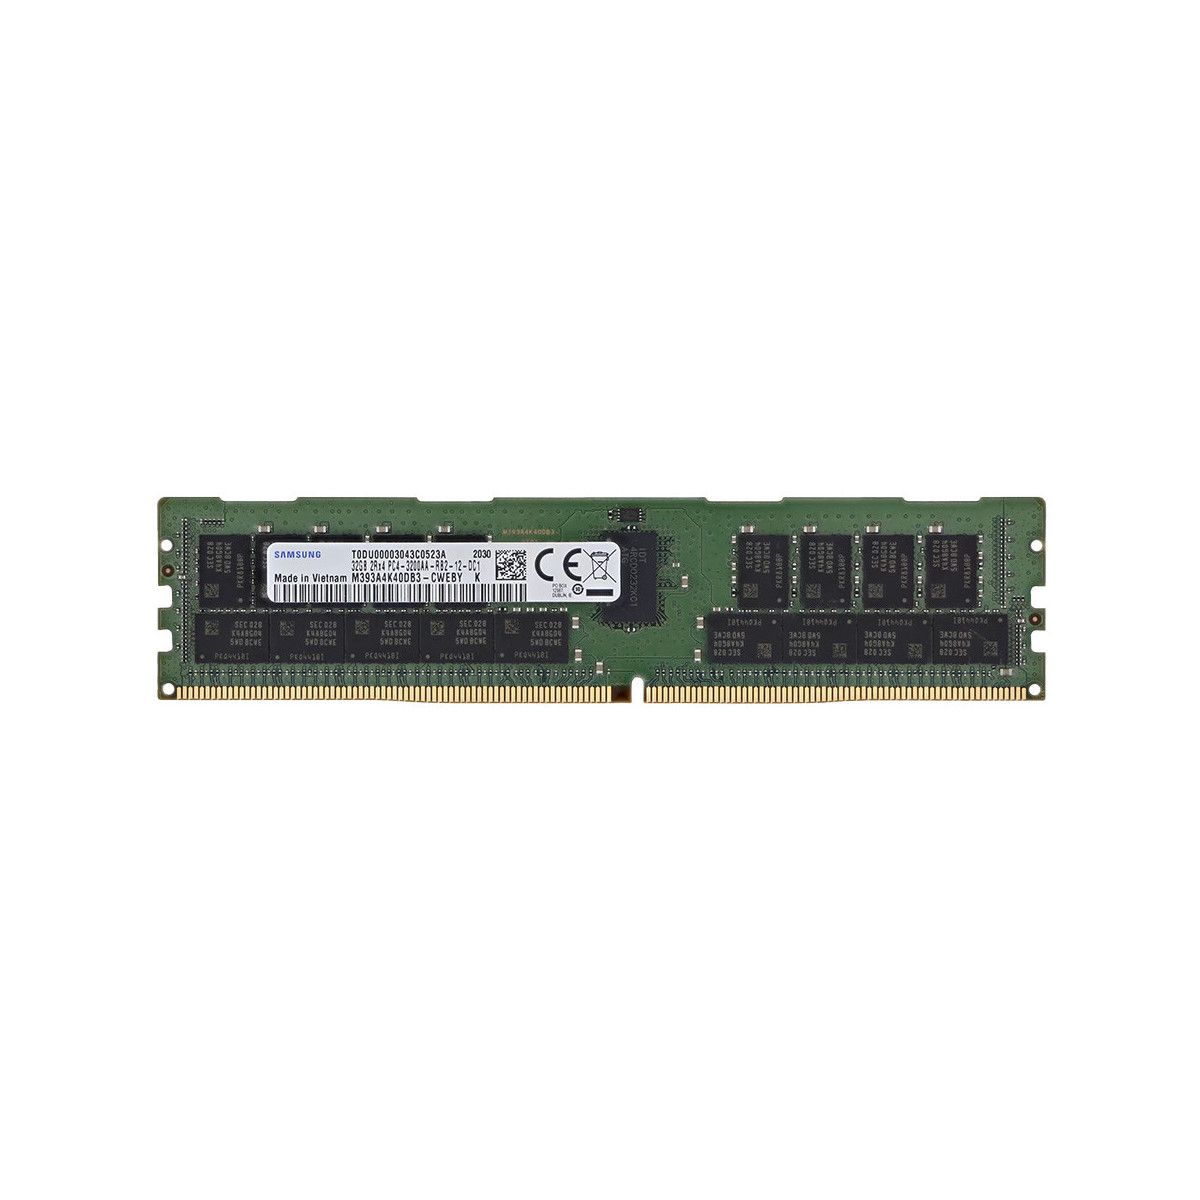 P06033-H21-MS - Memstar 1x 32GB DDR4-3200 RDIMM PC4-25600R - Mem-star OEM compatibile Memoria 1 - Memstar 